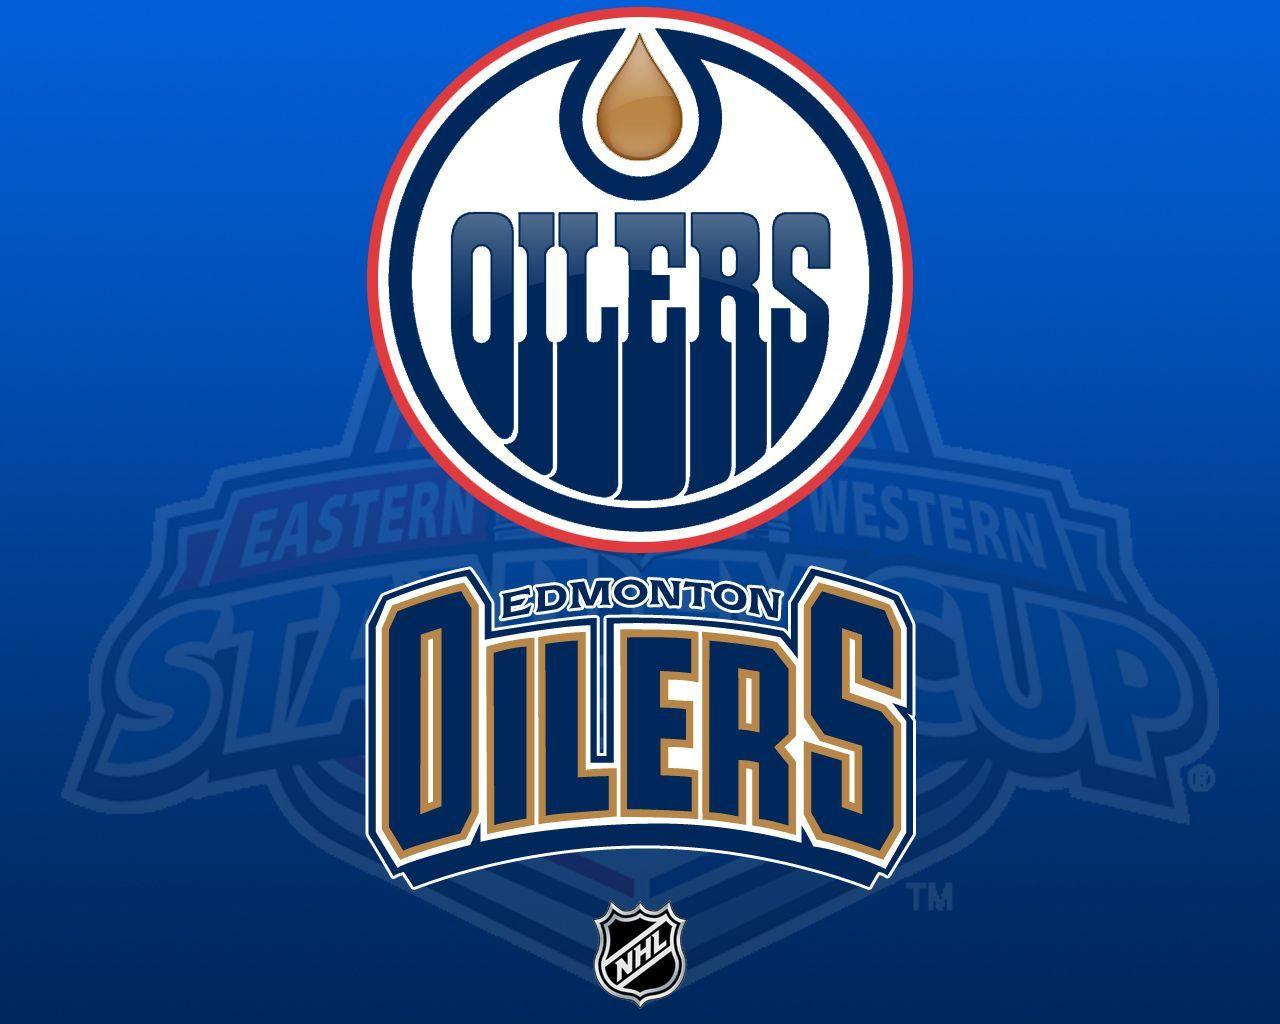 Edmonton Oilers Wallpaper Download W7CE1. EDecorati.com™